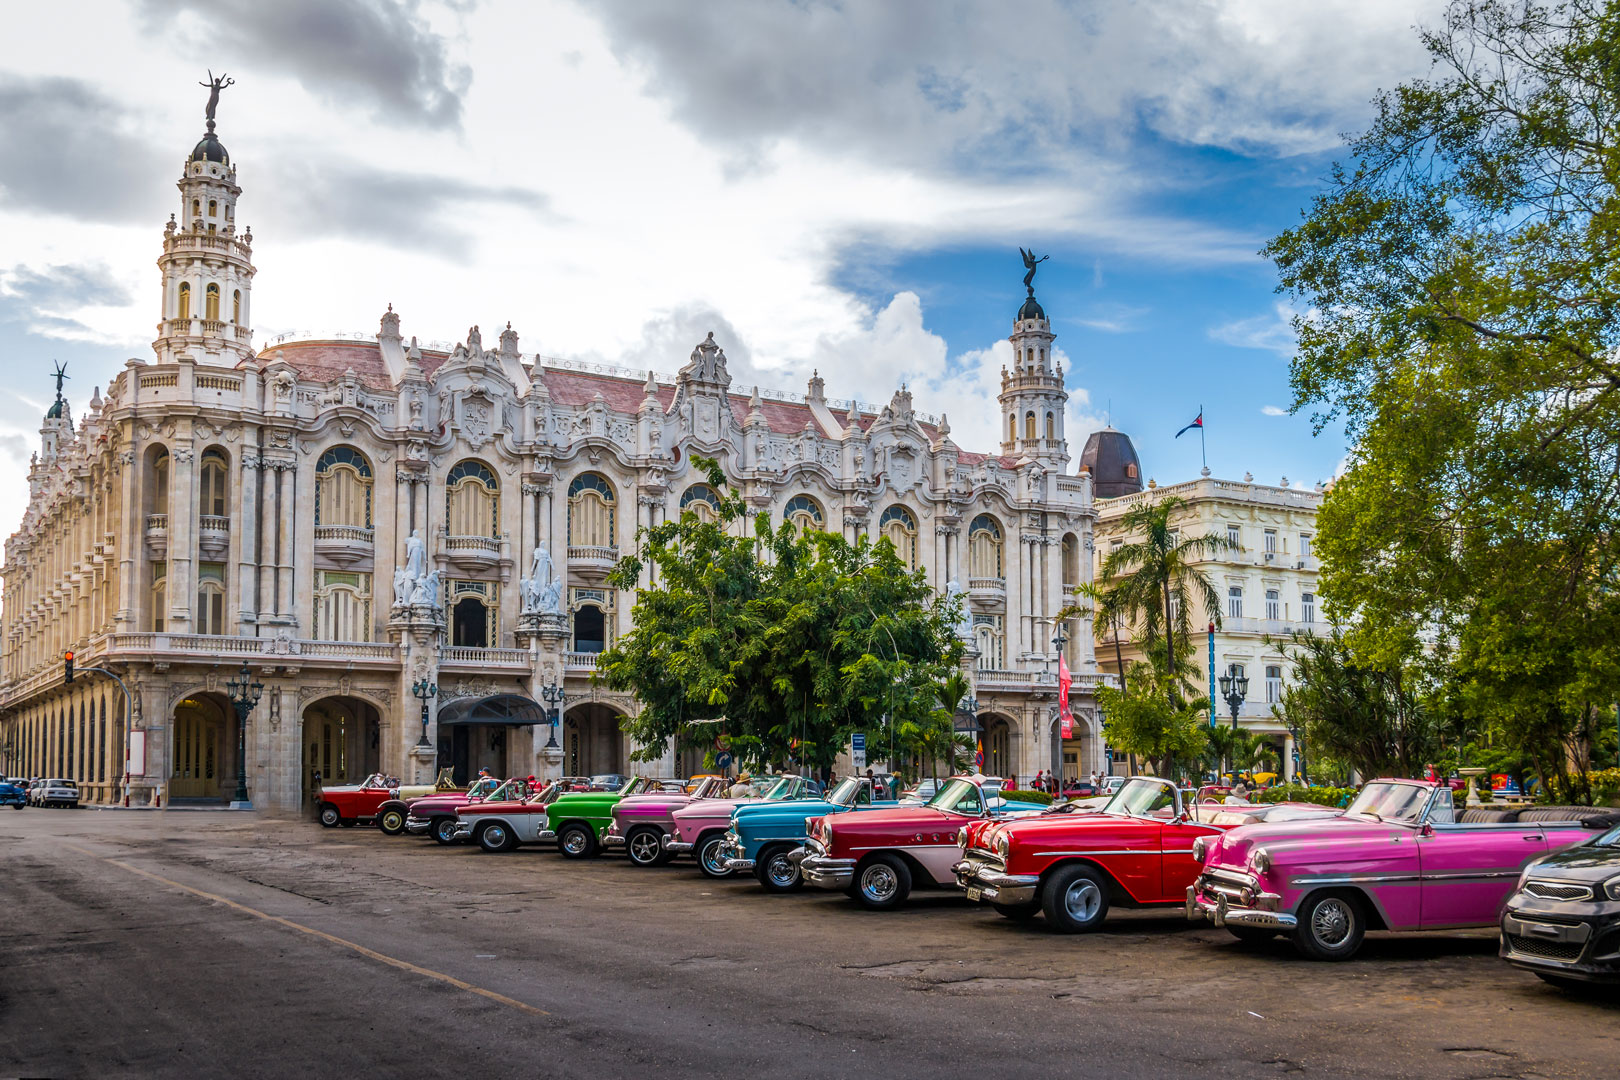 Vintage cars in Old Havana (Habana Vieja) in front of the Gran Teatro de La Habana